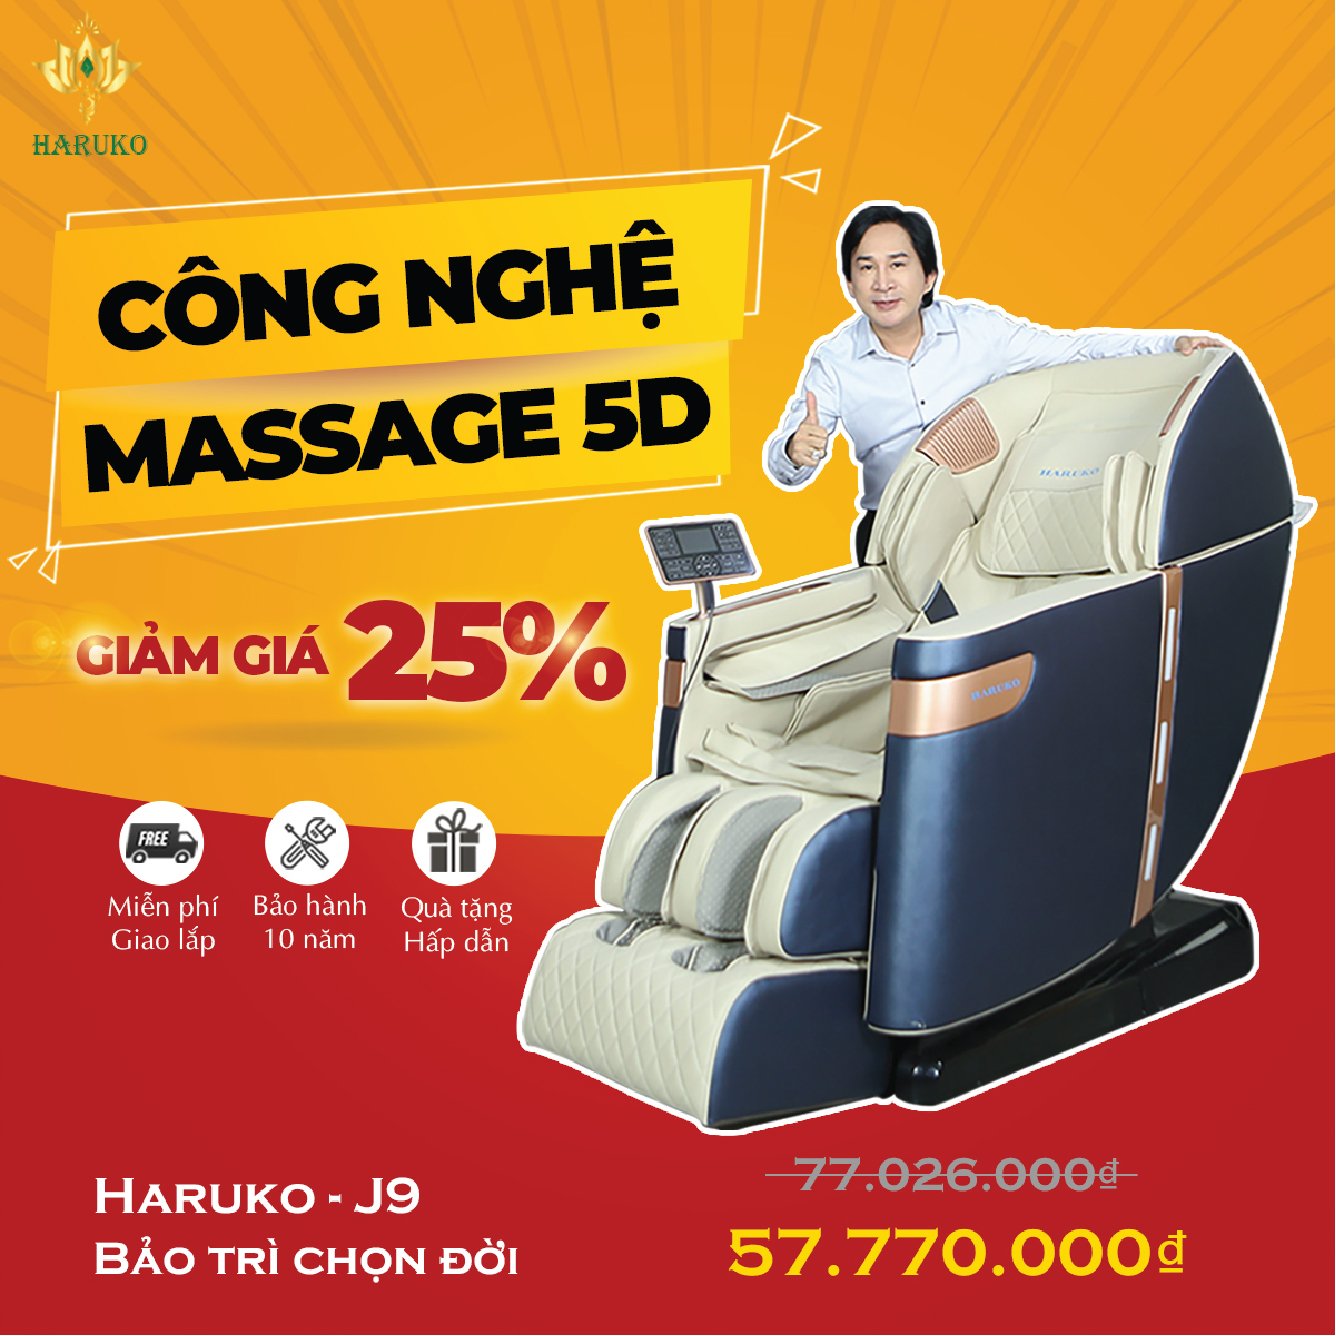 https://upanh.tv/images/2021/10/01/ghe-massage-haruko-j9-11.jpg